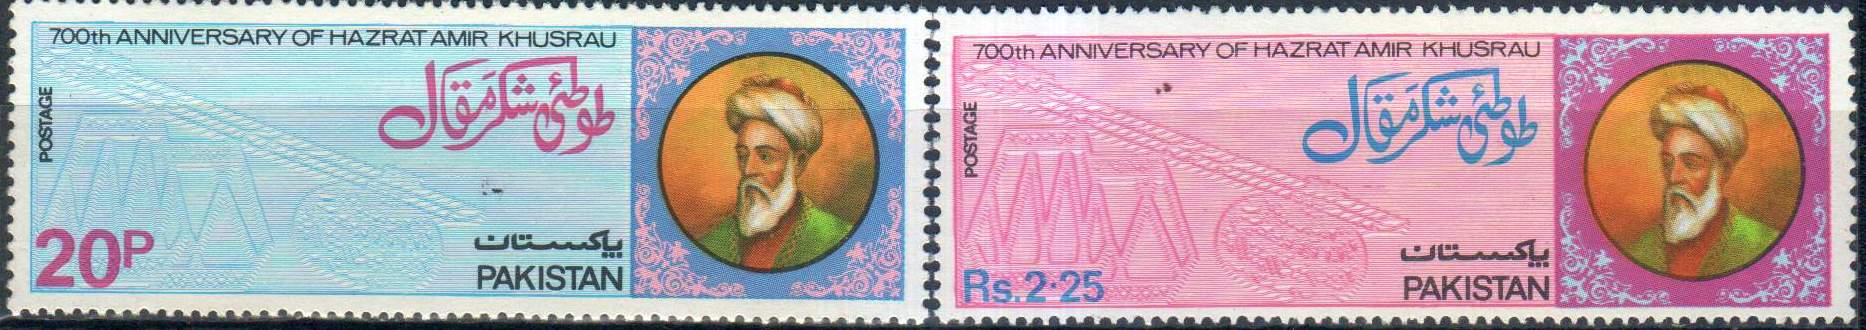 Pakistan Fdc 1975 Brochure & Stamps Hazrat Amir Khusrau Sitar - Click Image to Close